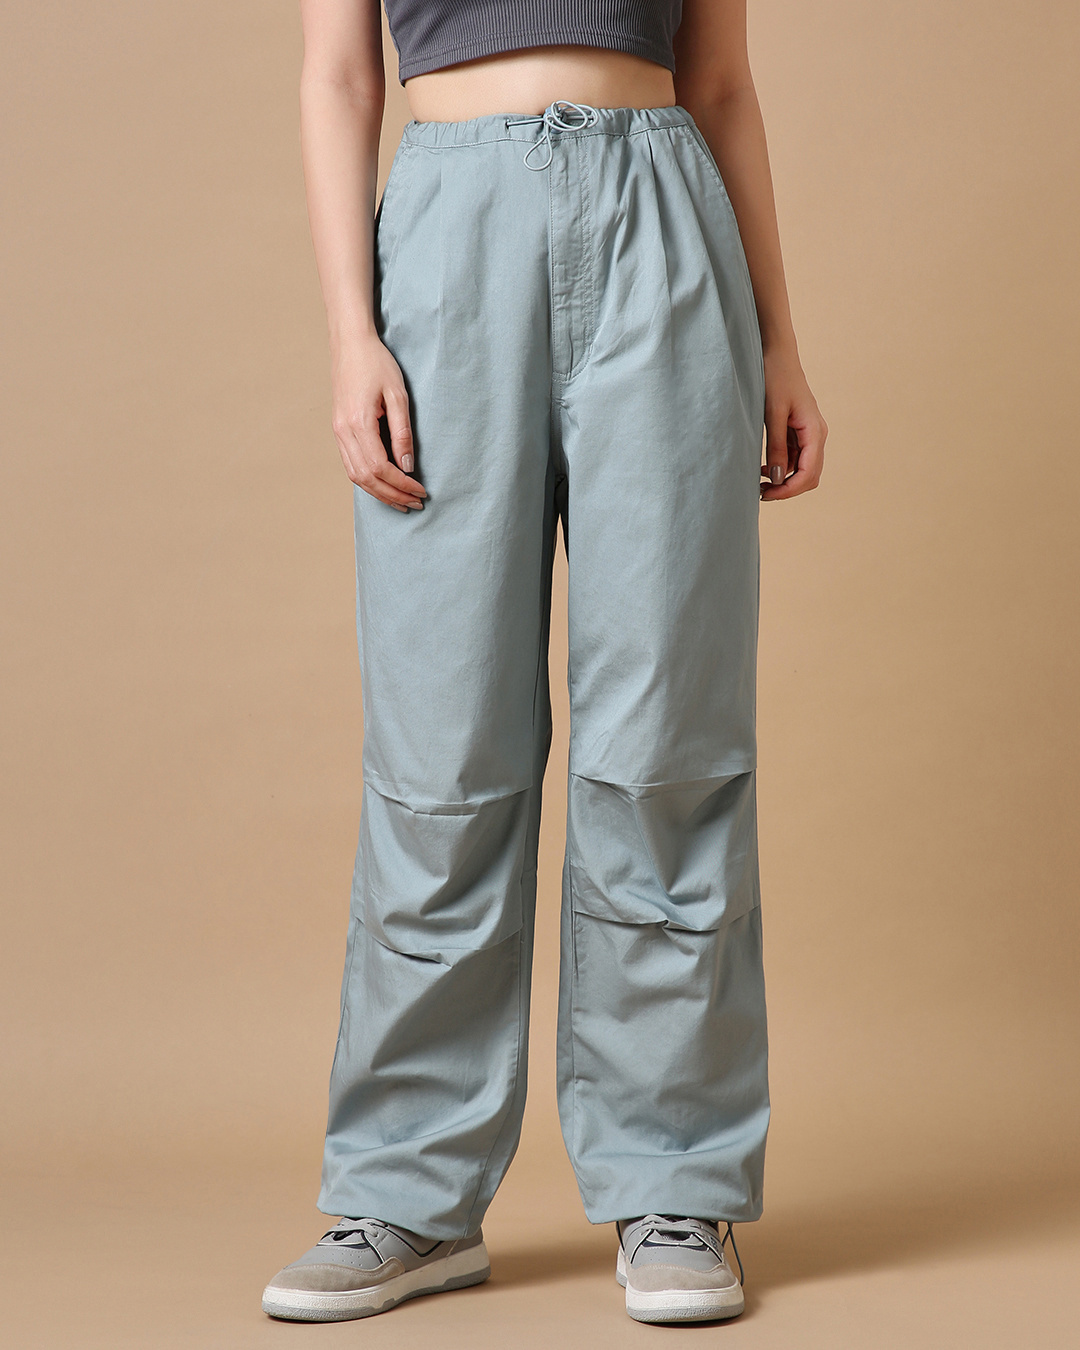 Buy Women's Grey Oversized Plus Size Parachute Pants Online at Bewakoof